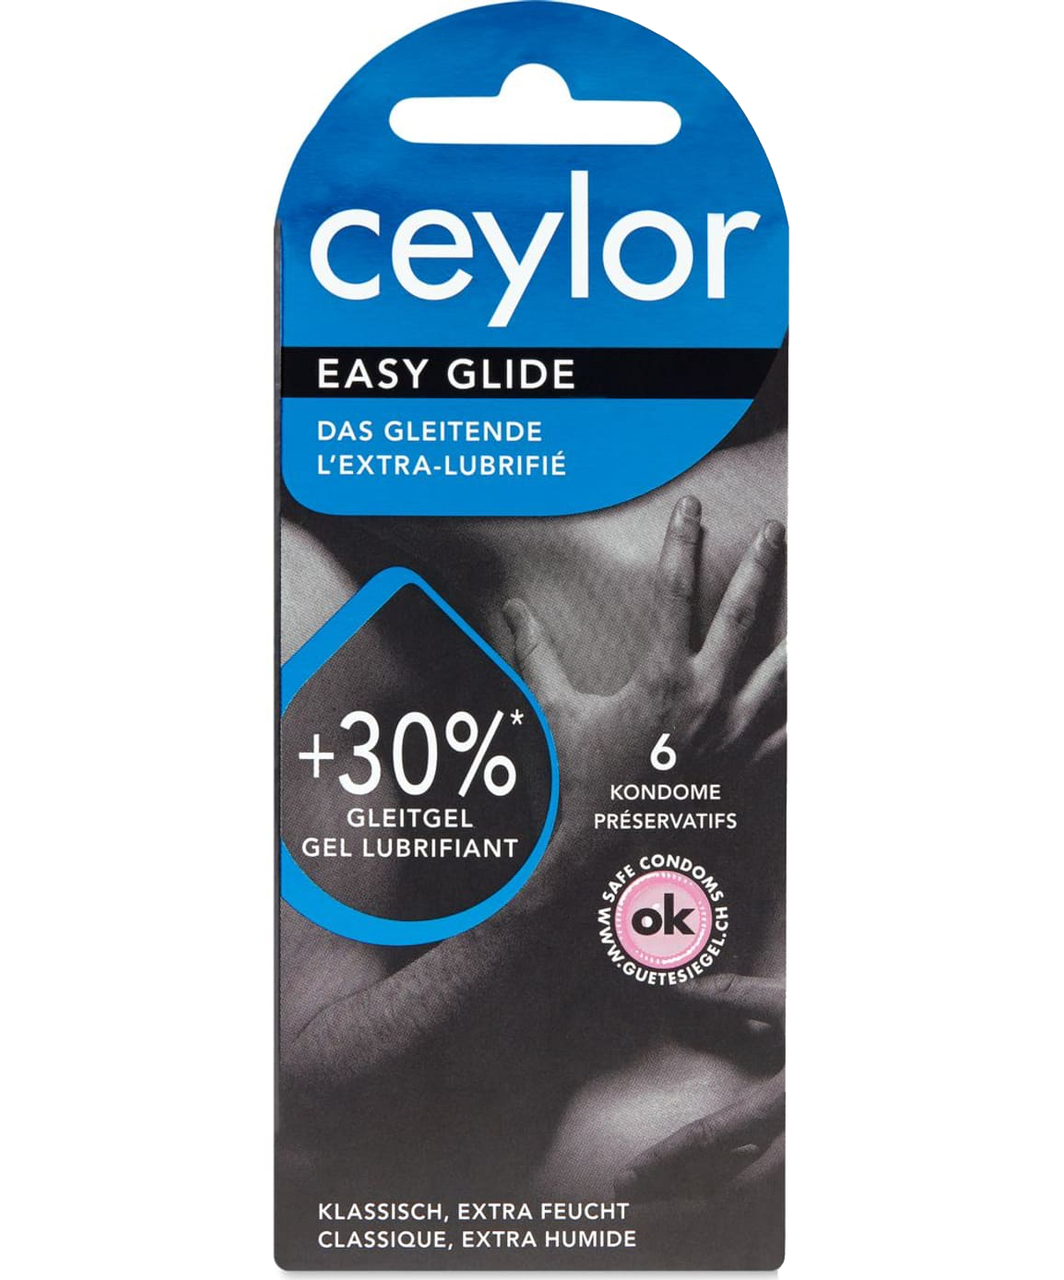 Ceylor Easy Glide презервативы (6 шт.)